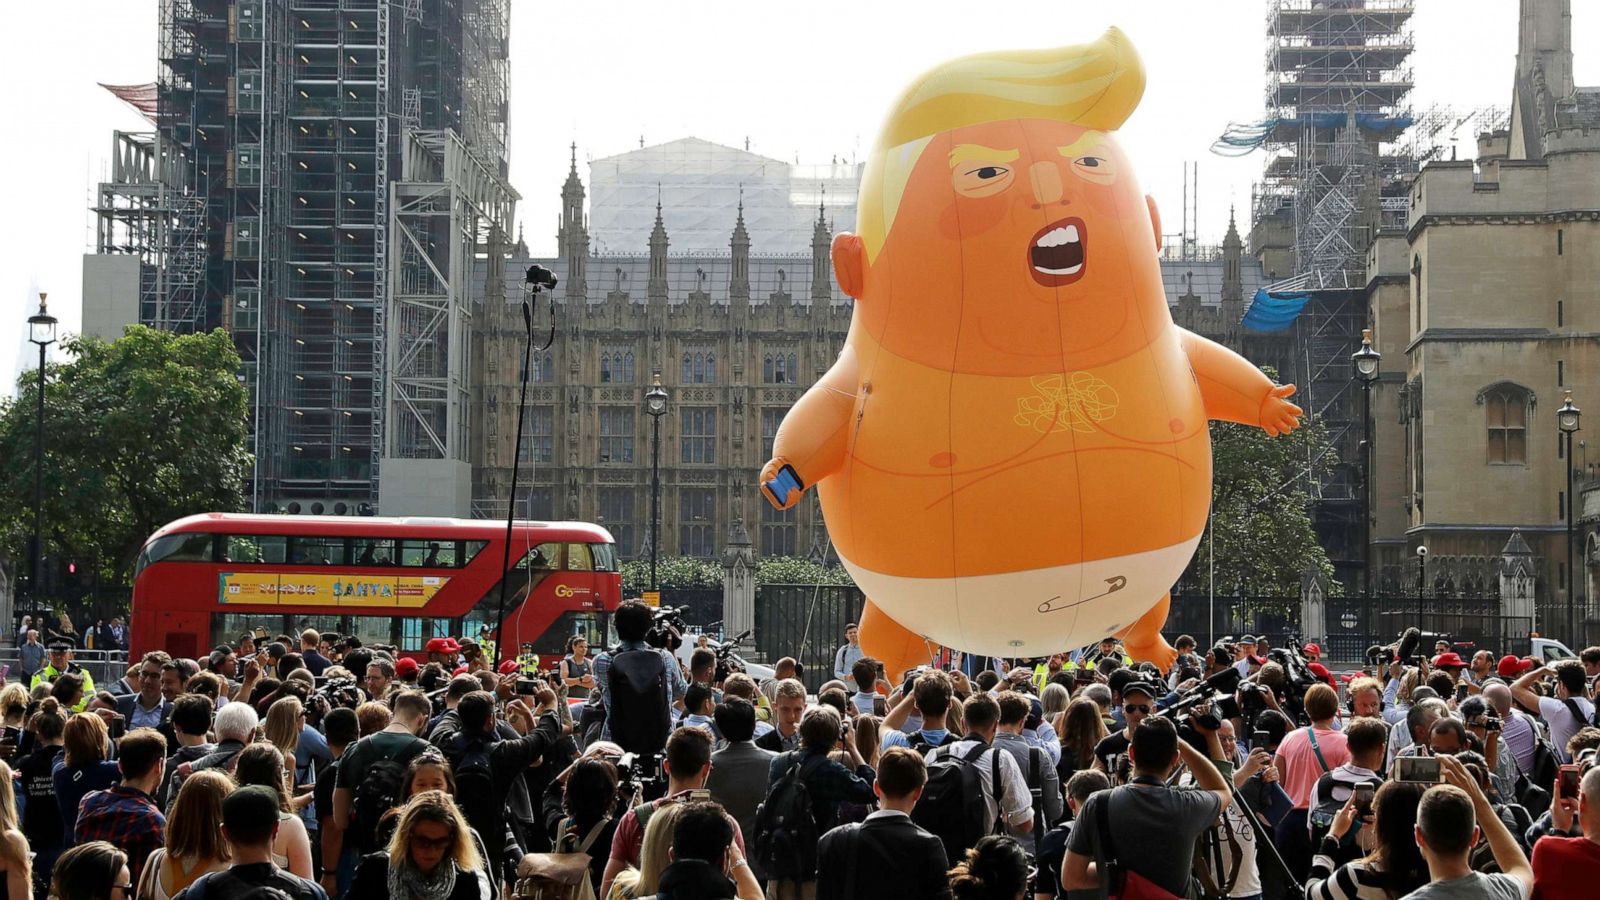 Schaap Weglaten Oorzaak Activist group wants to fly 'Baby Trump' balloon over July 4th event - ABC  News